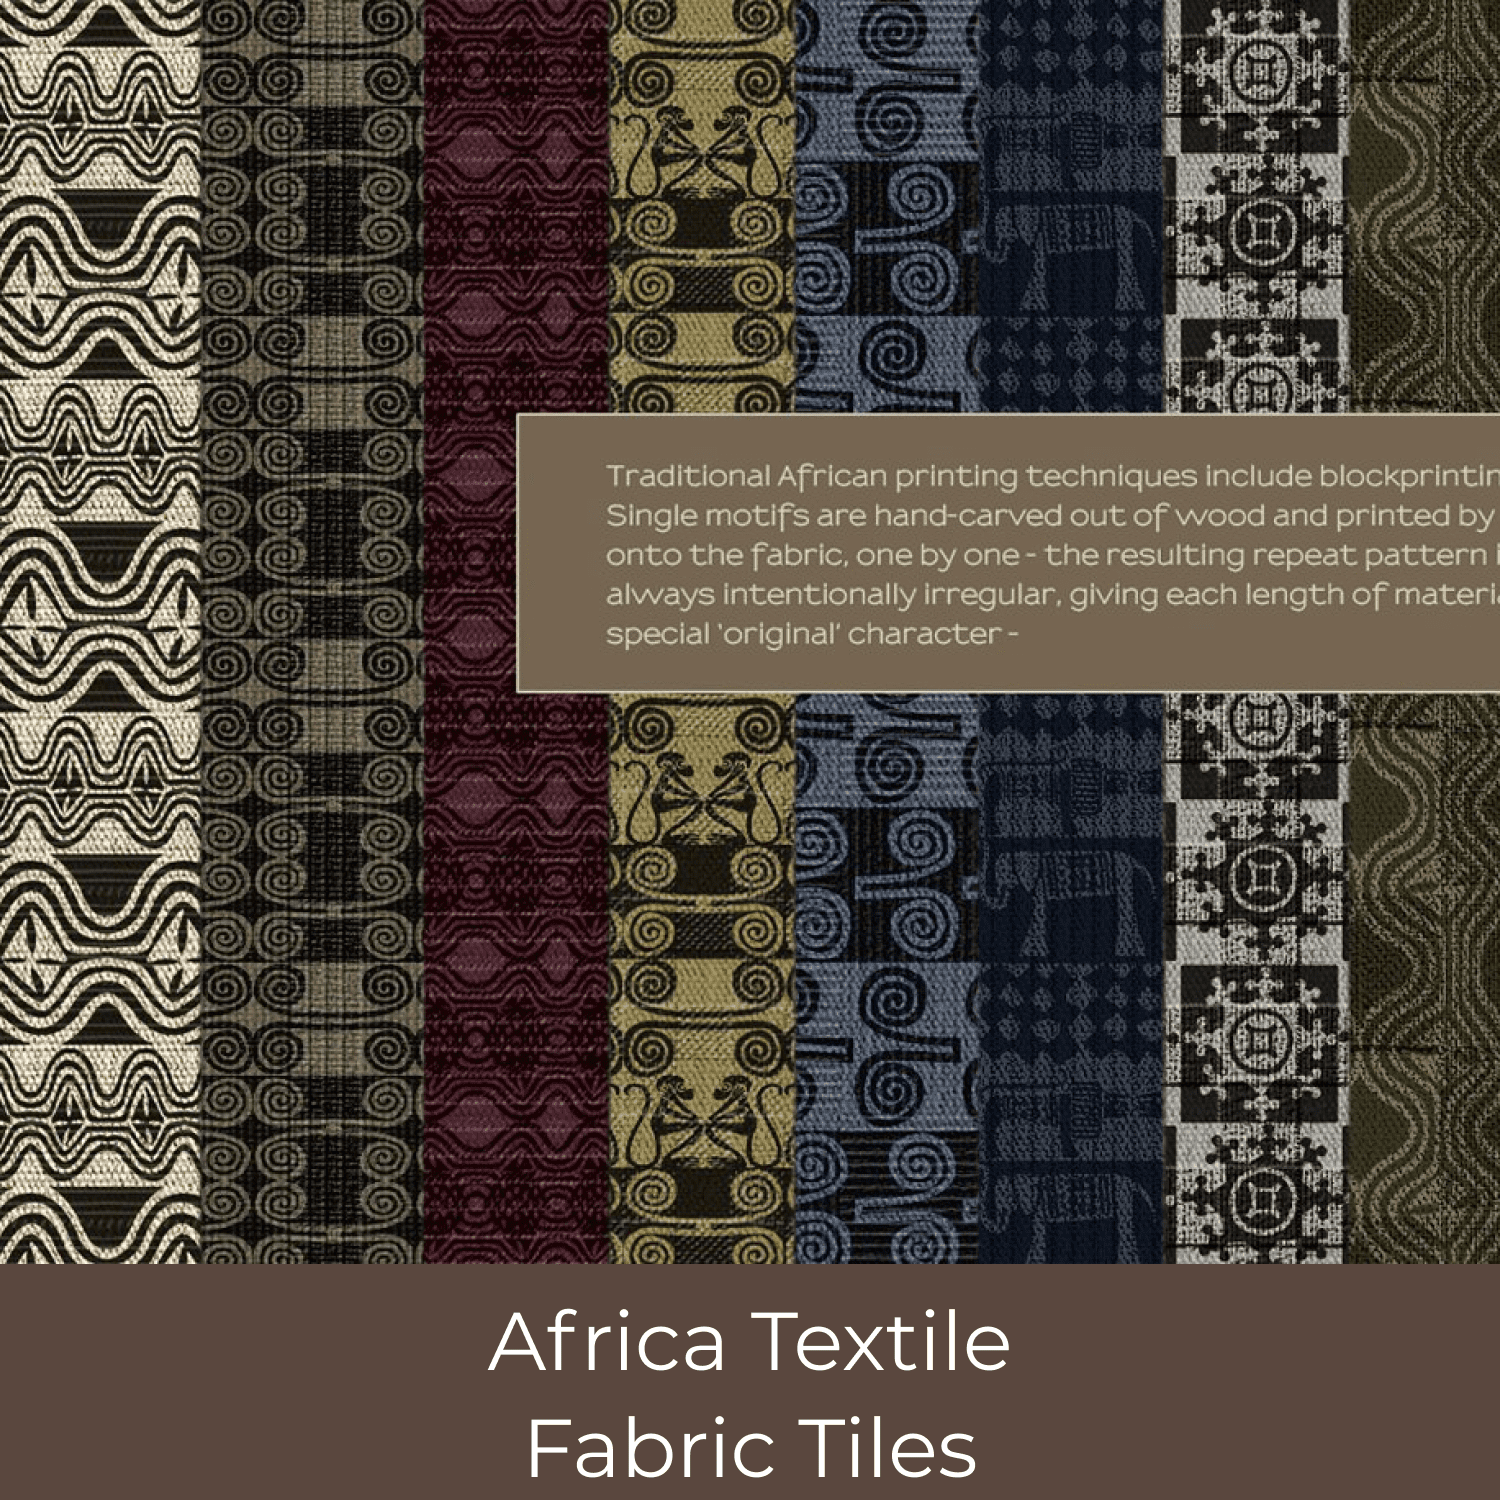 Africa Textile Fabric Tiles.